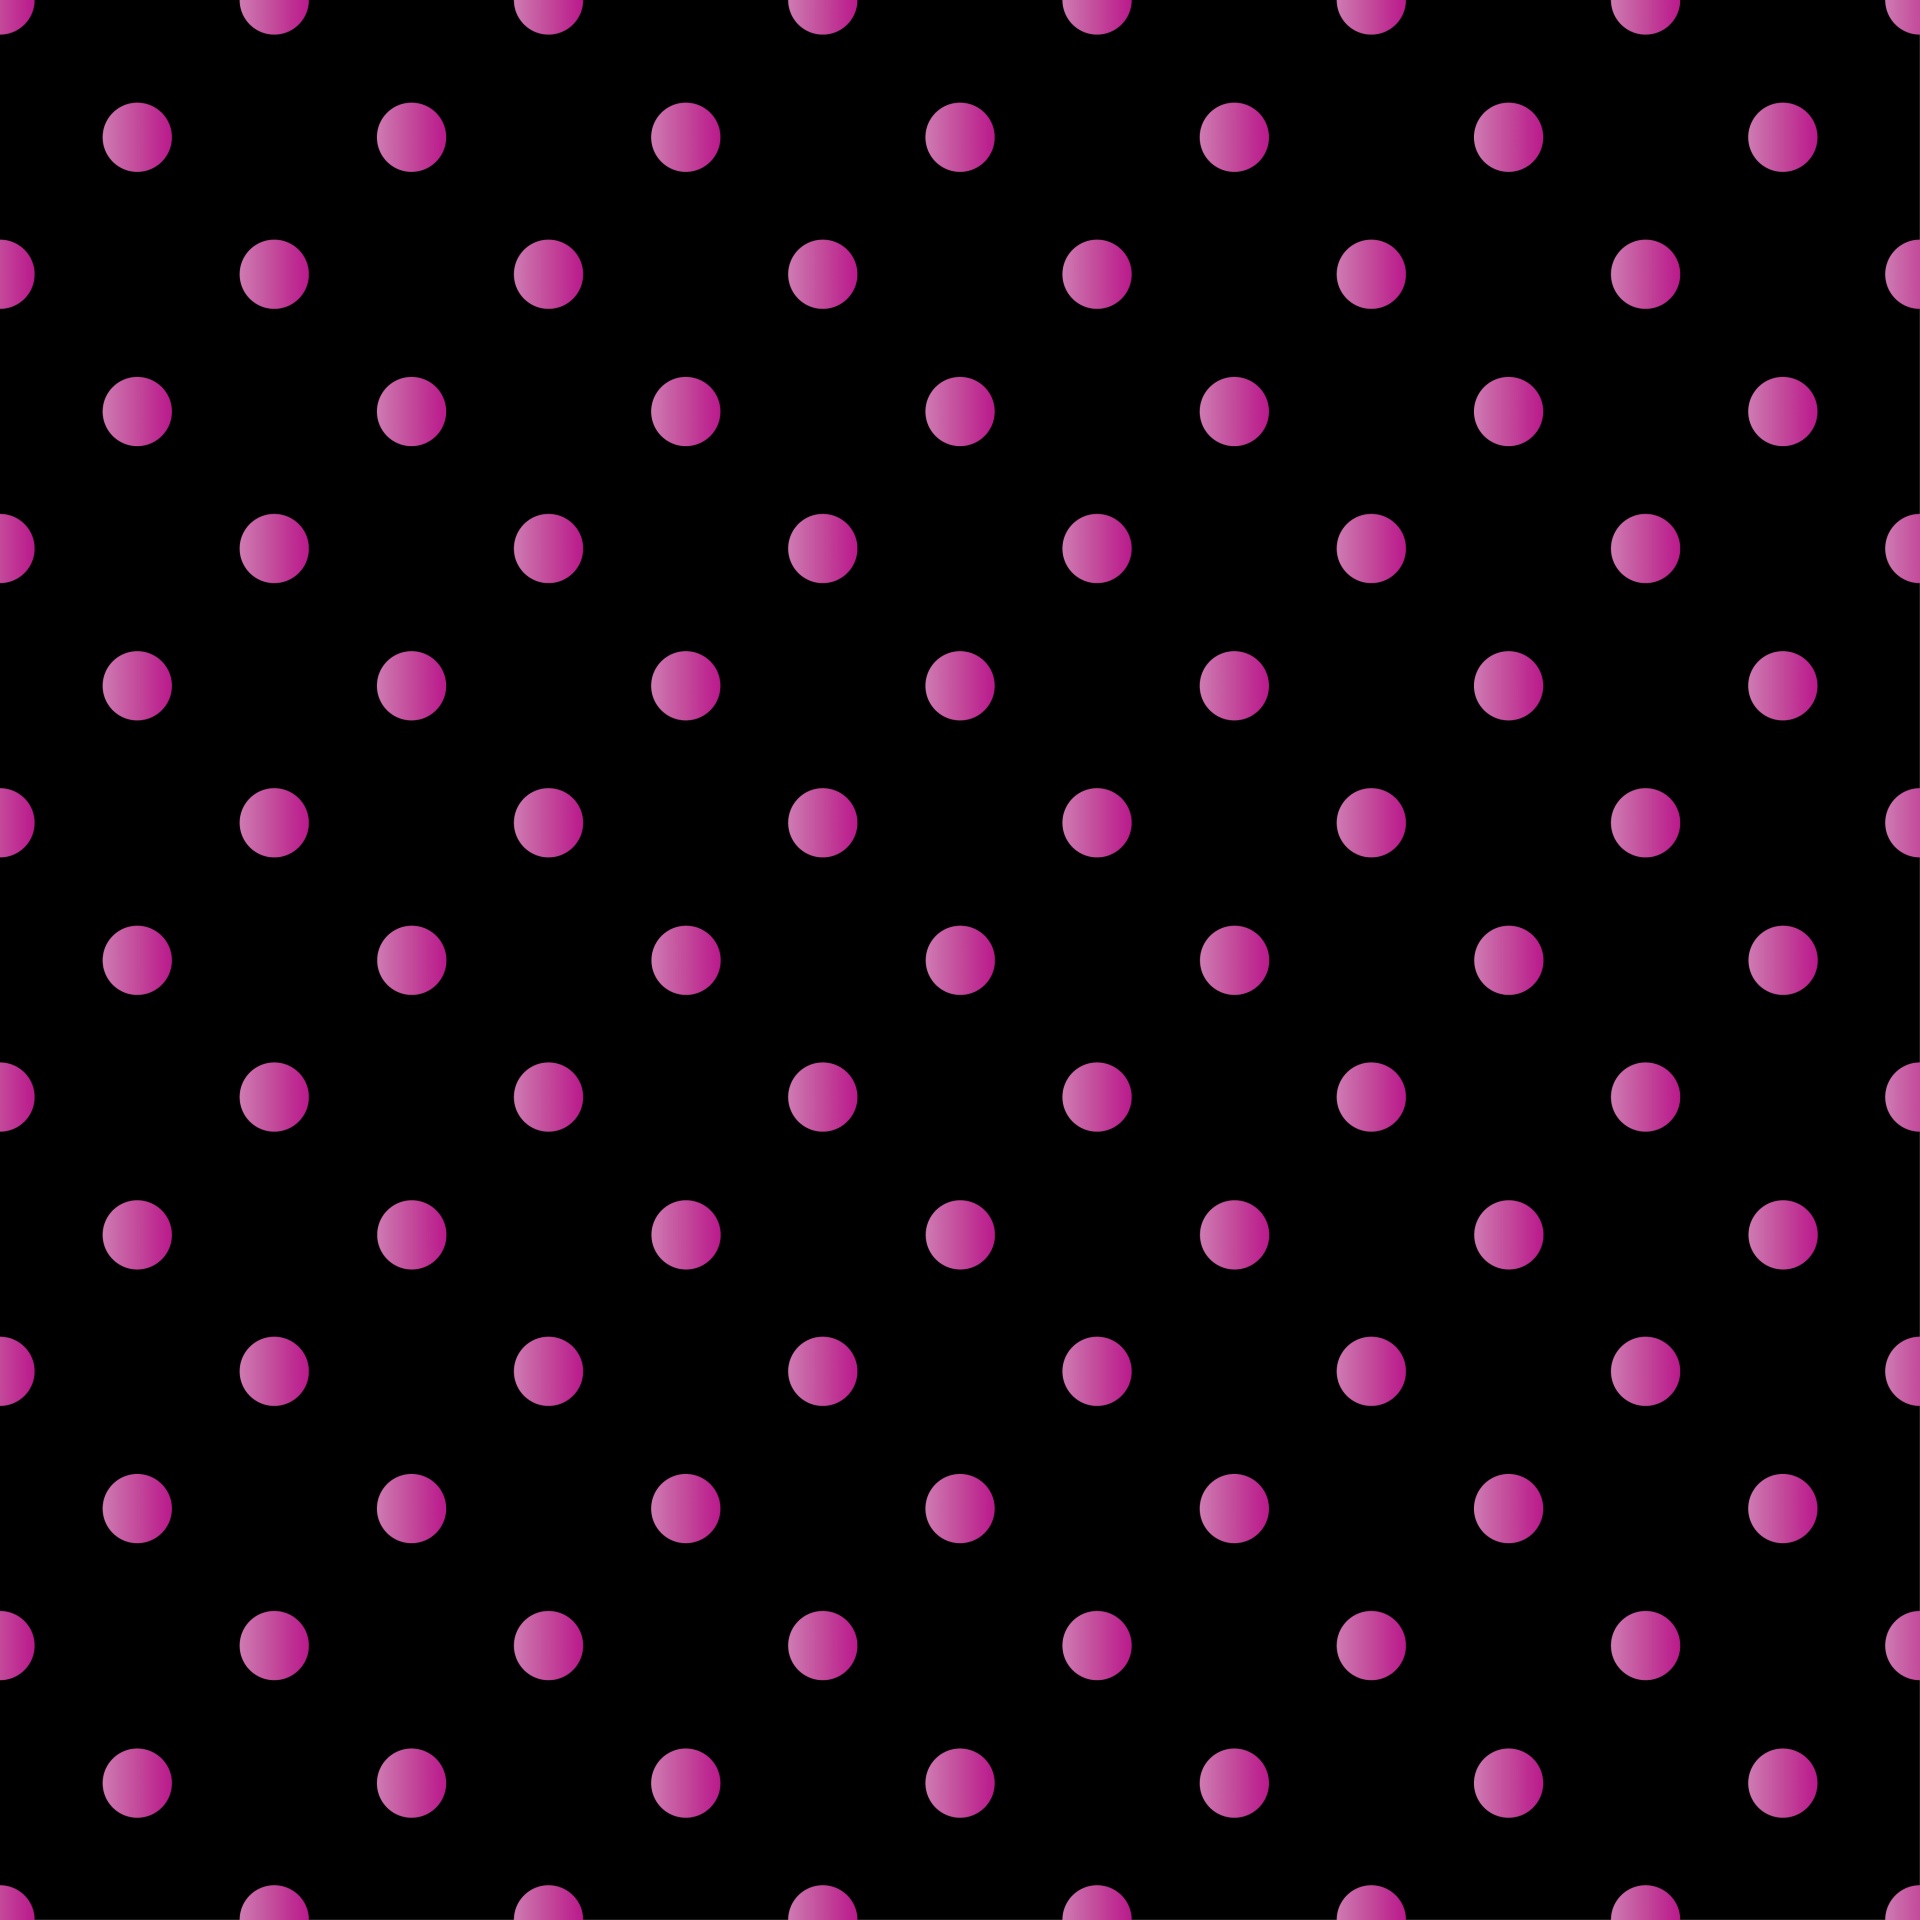 Hot pink polka dots on black background seamless wallpaper pattern